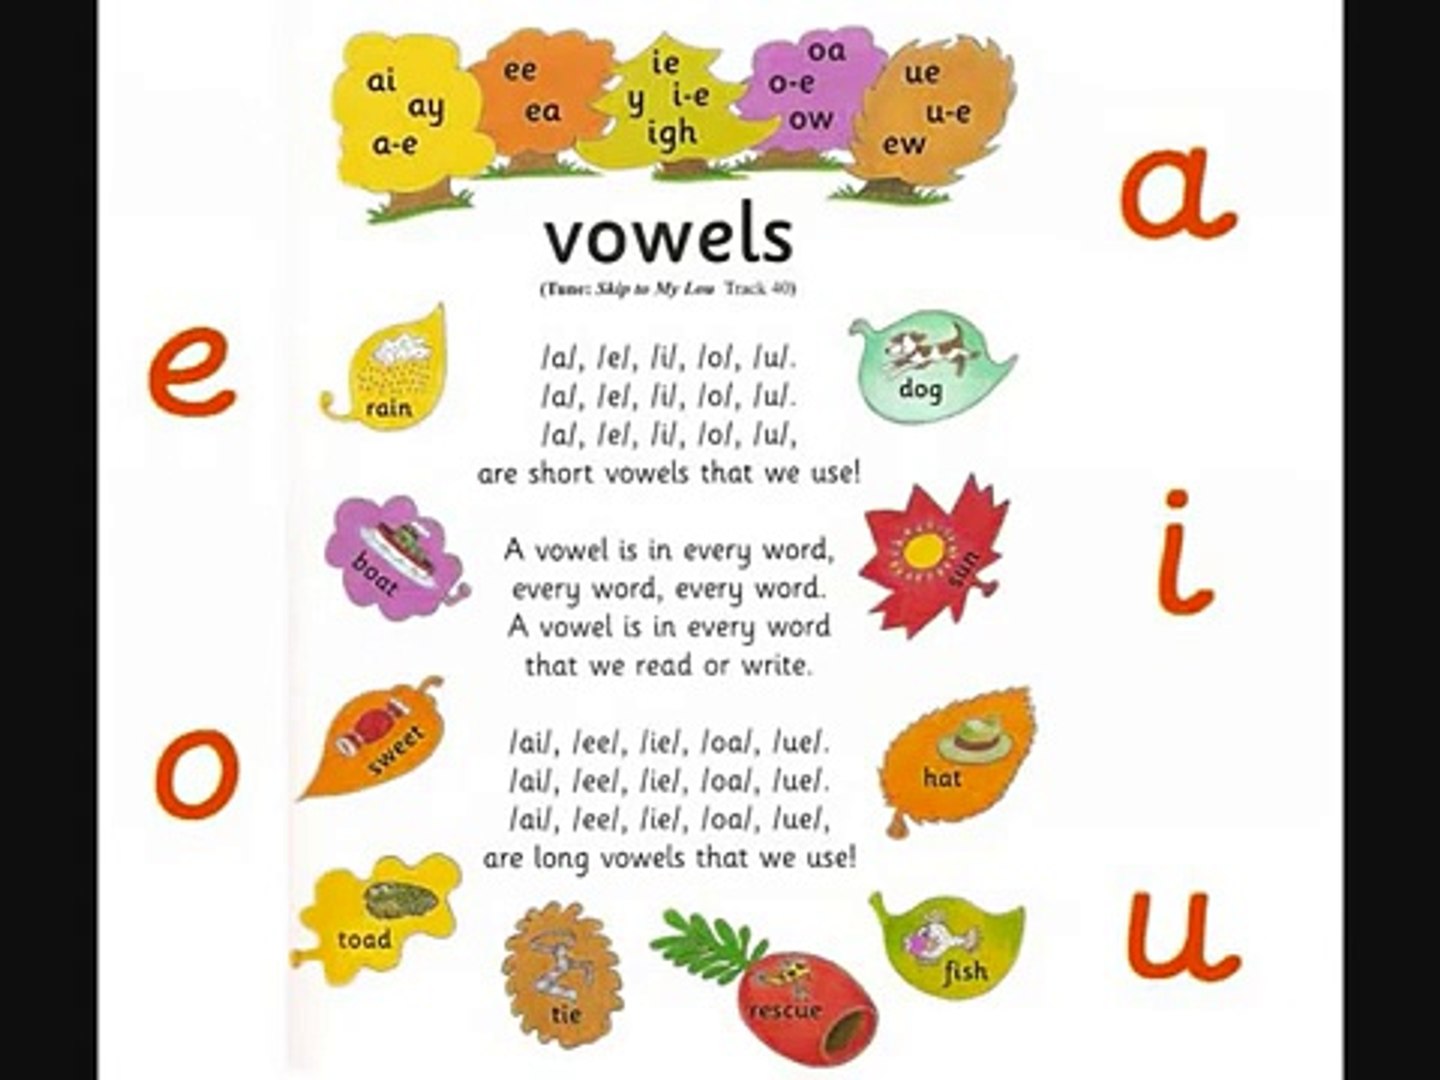 Vowels in a Children'S Song Refrain